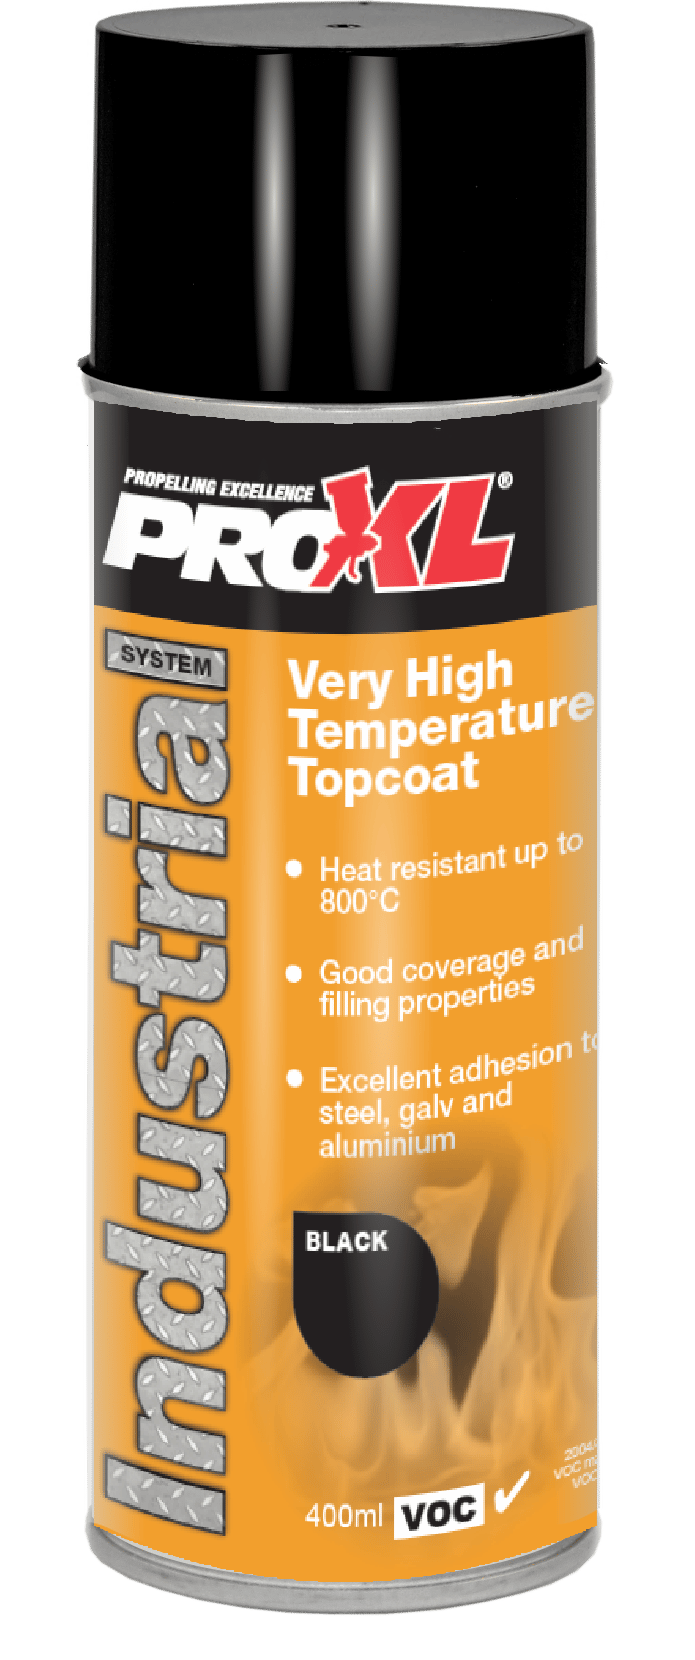 High Temperature Topcoat Aerosol (400ml) Product Image